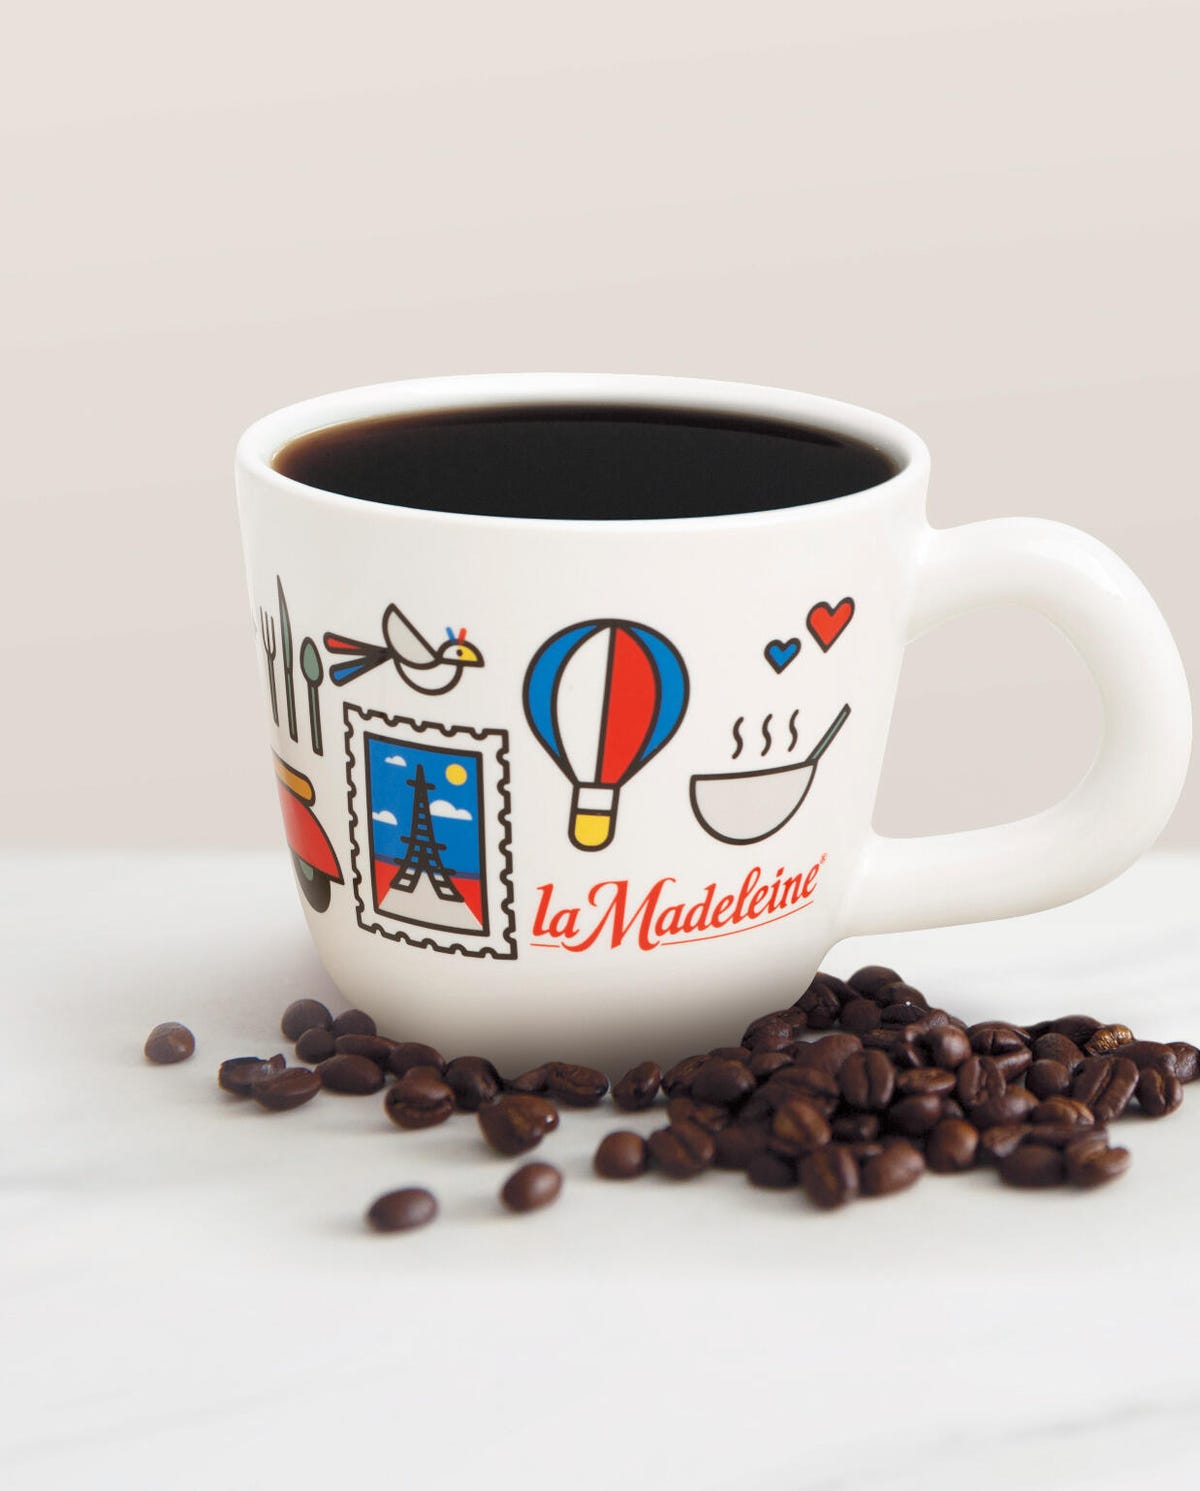 La Madeleine cup of coffee